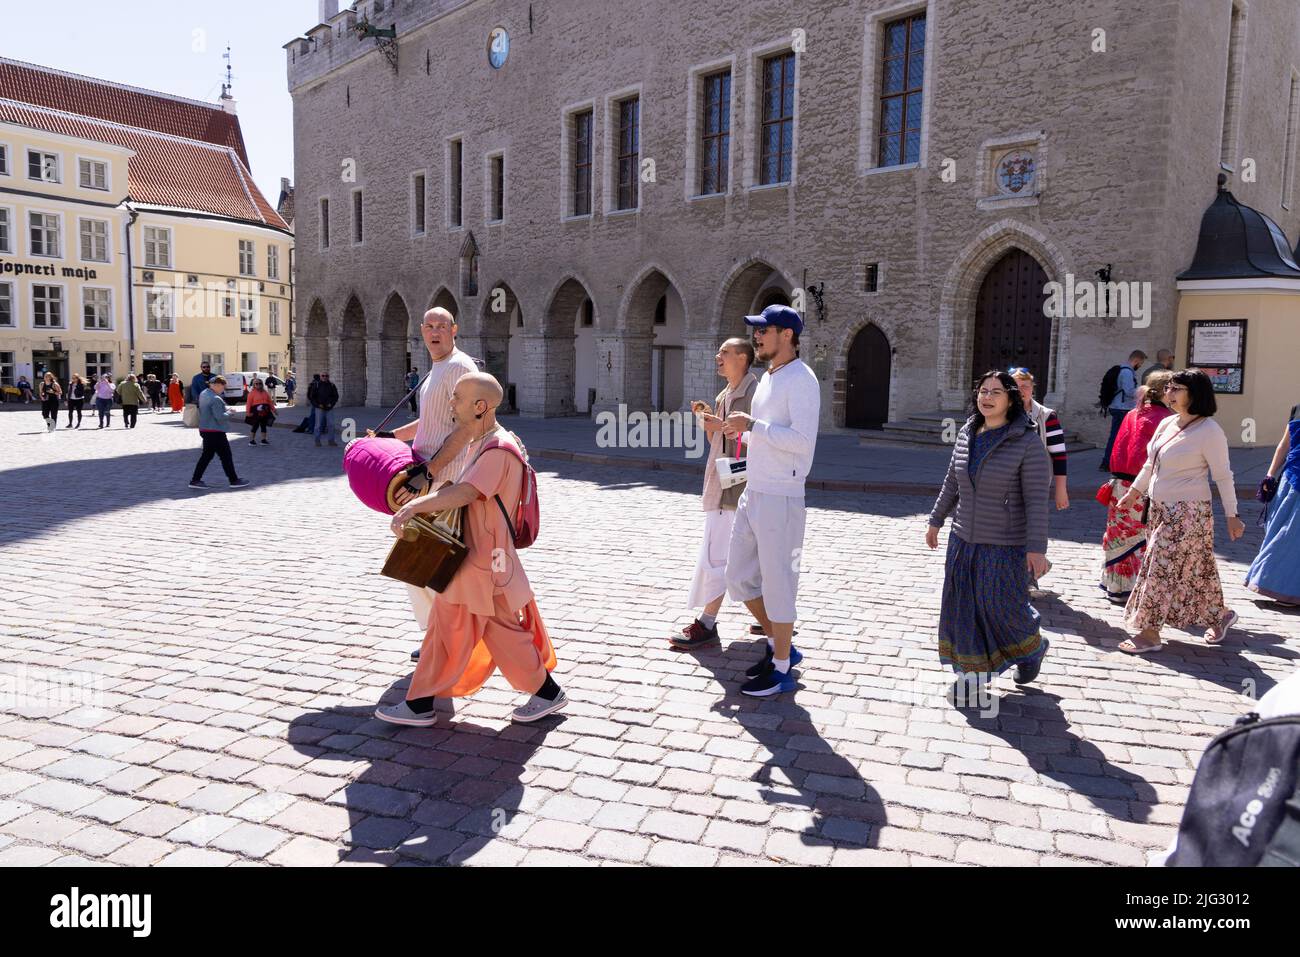 International Society for Krishna Consciousness, Hare Krishna religious organisation - people walking and chanting, Tallinn old town, Estonia Europe Stock Photo